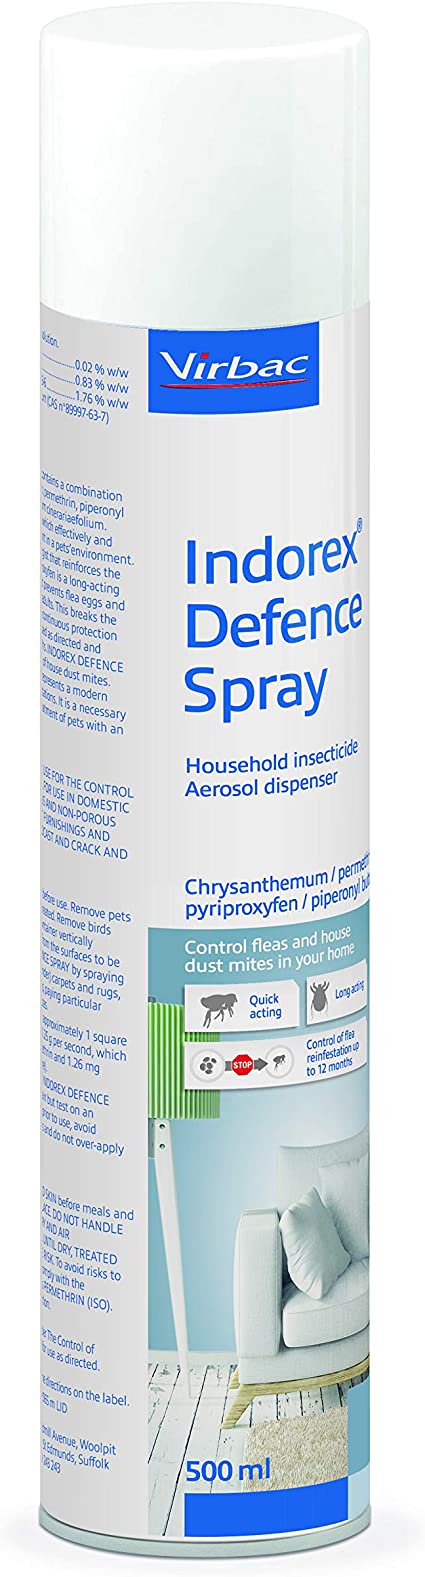 2X Indorex Defence Spray Flea Bomb